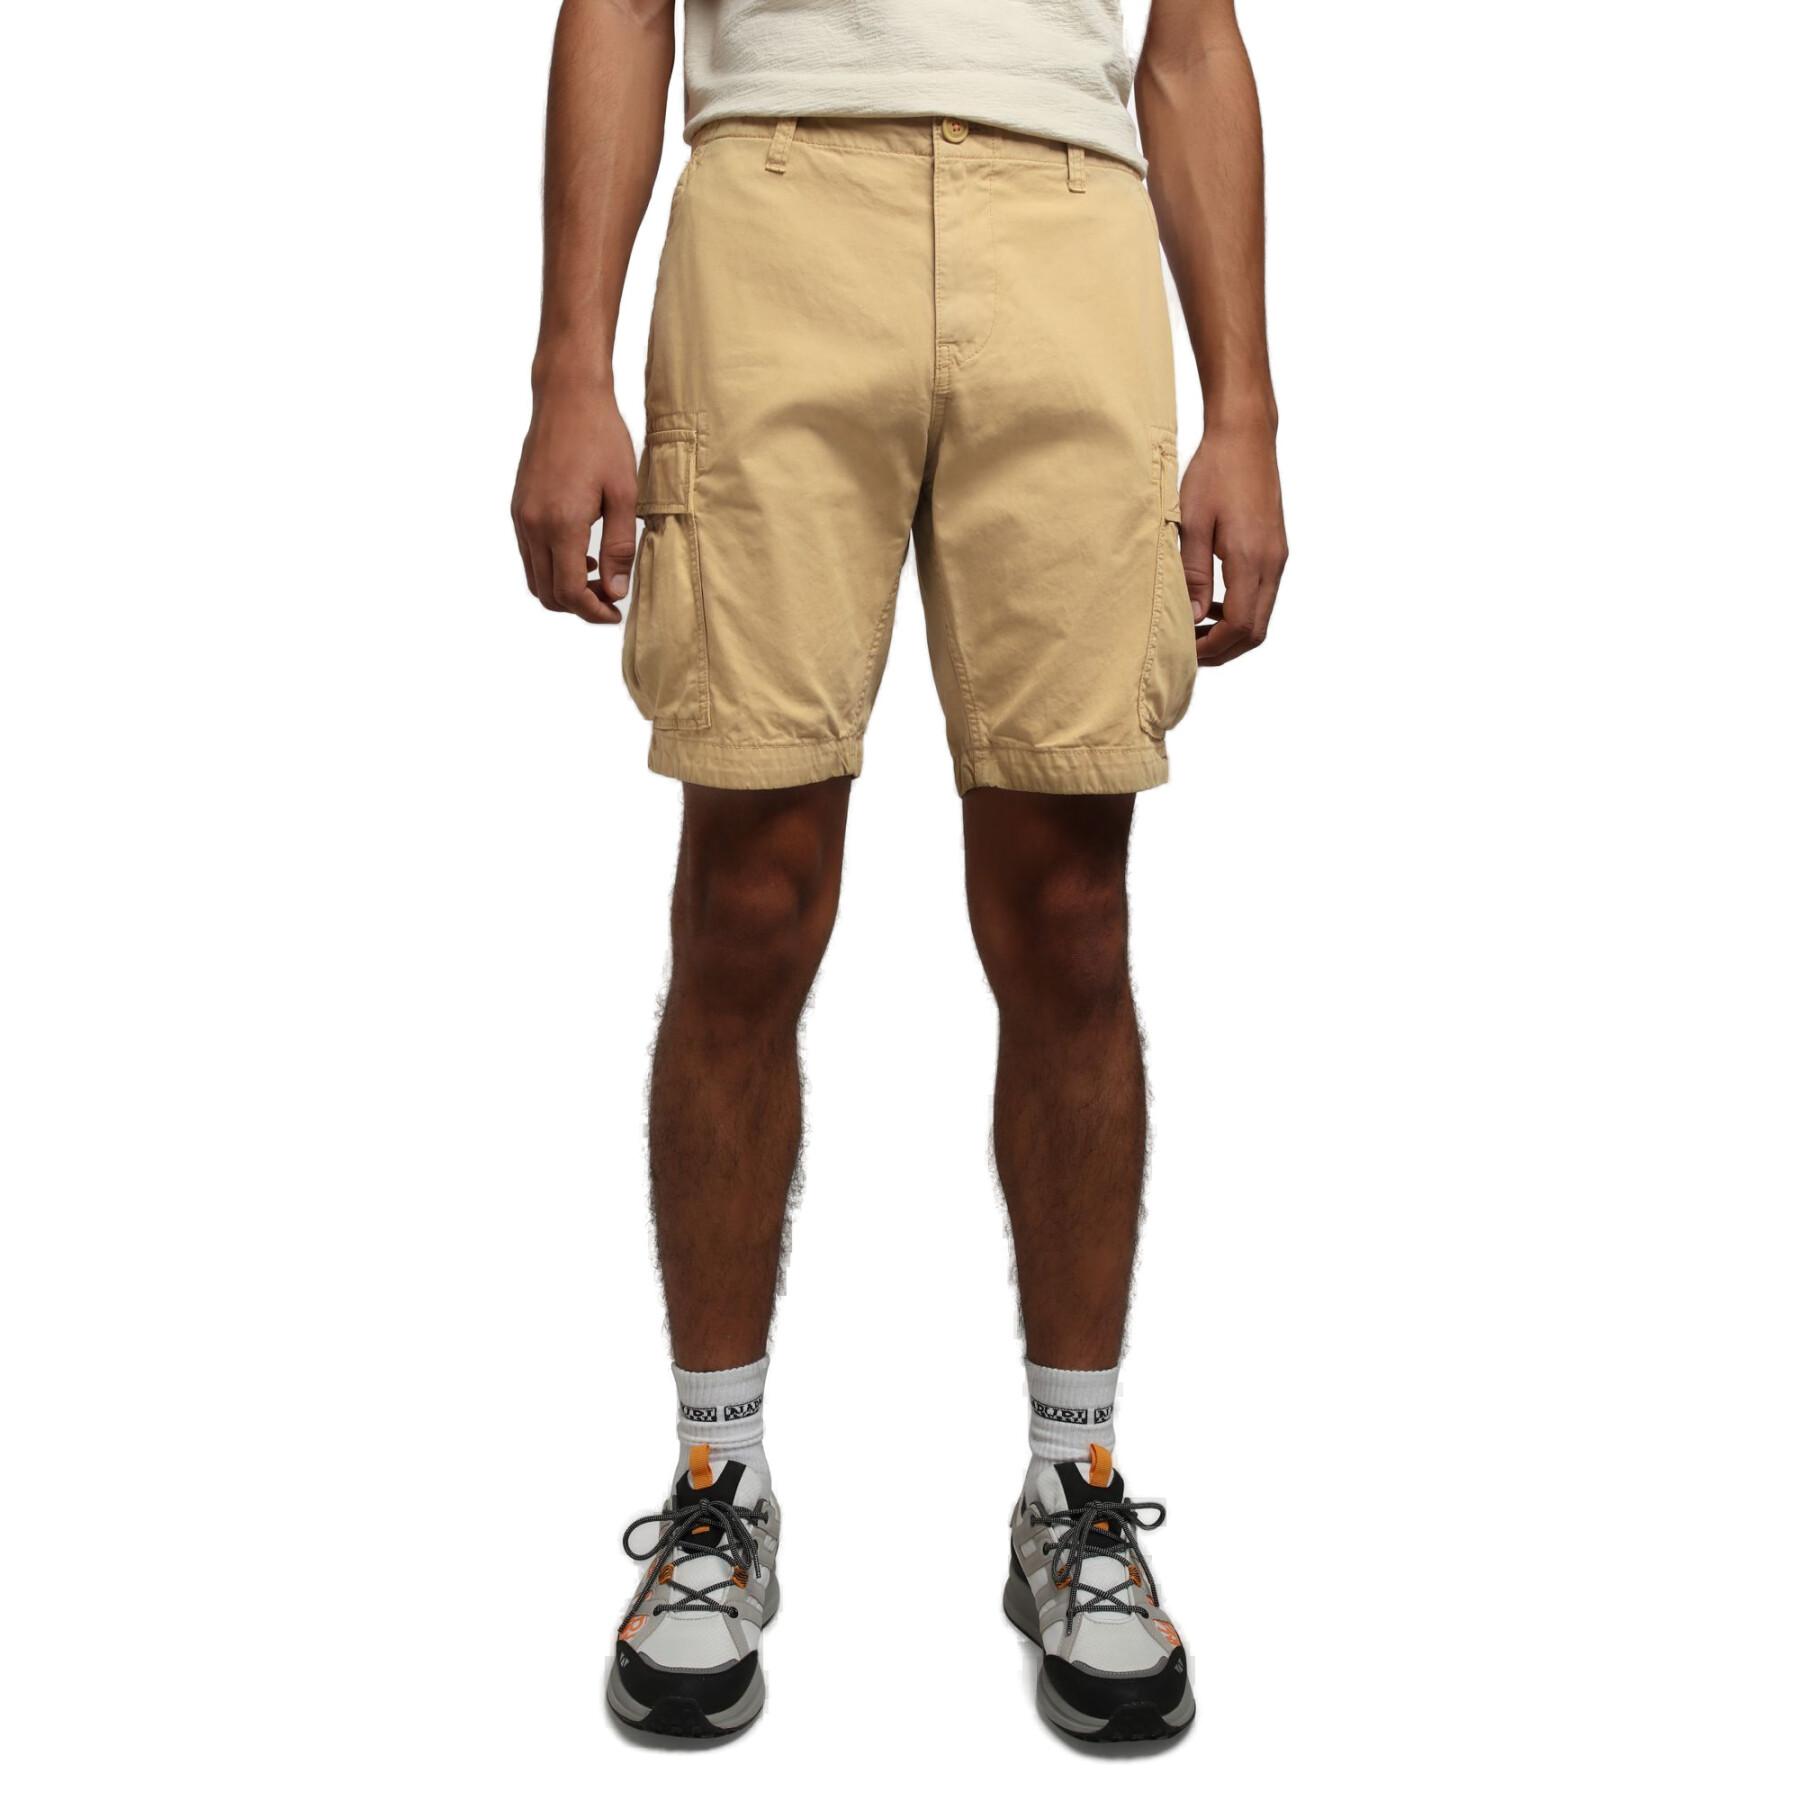 Bermuda shorts Napapijri Nus